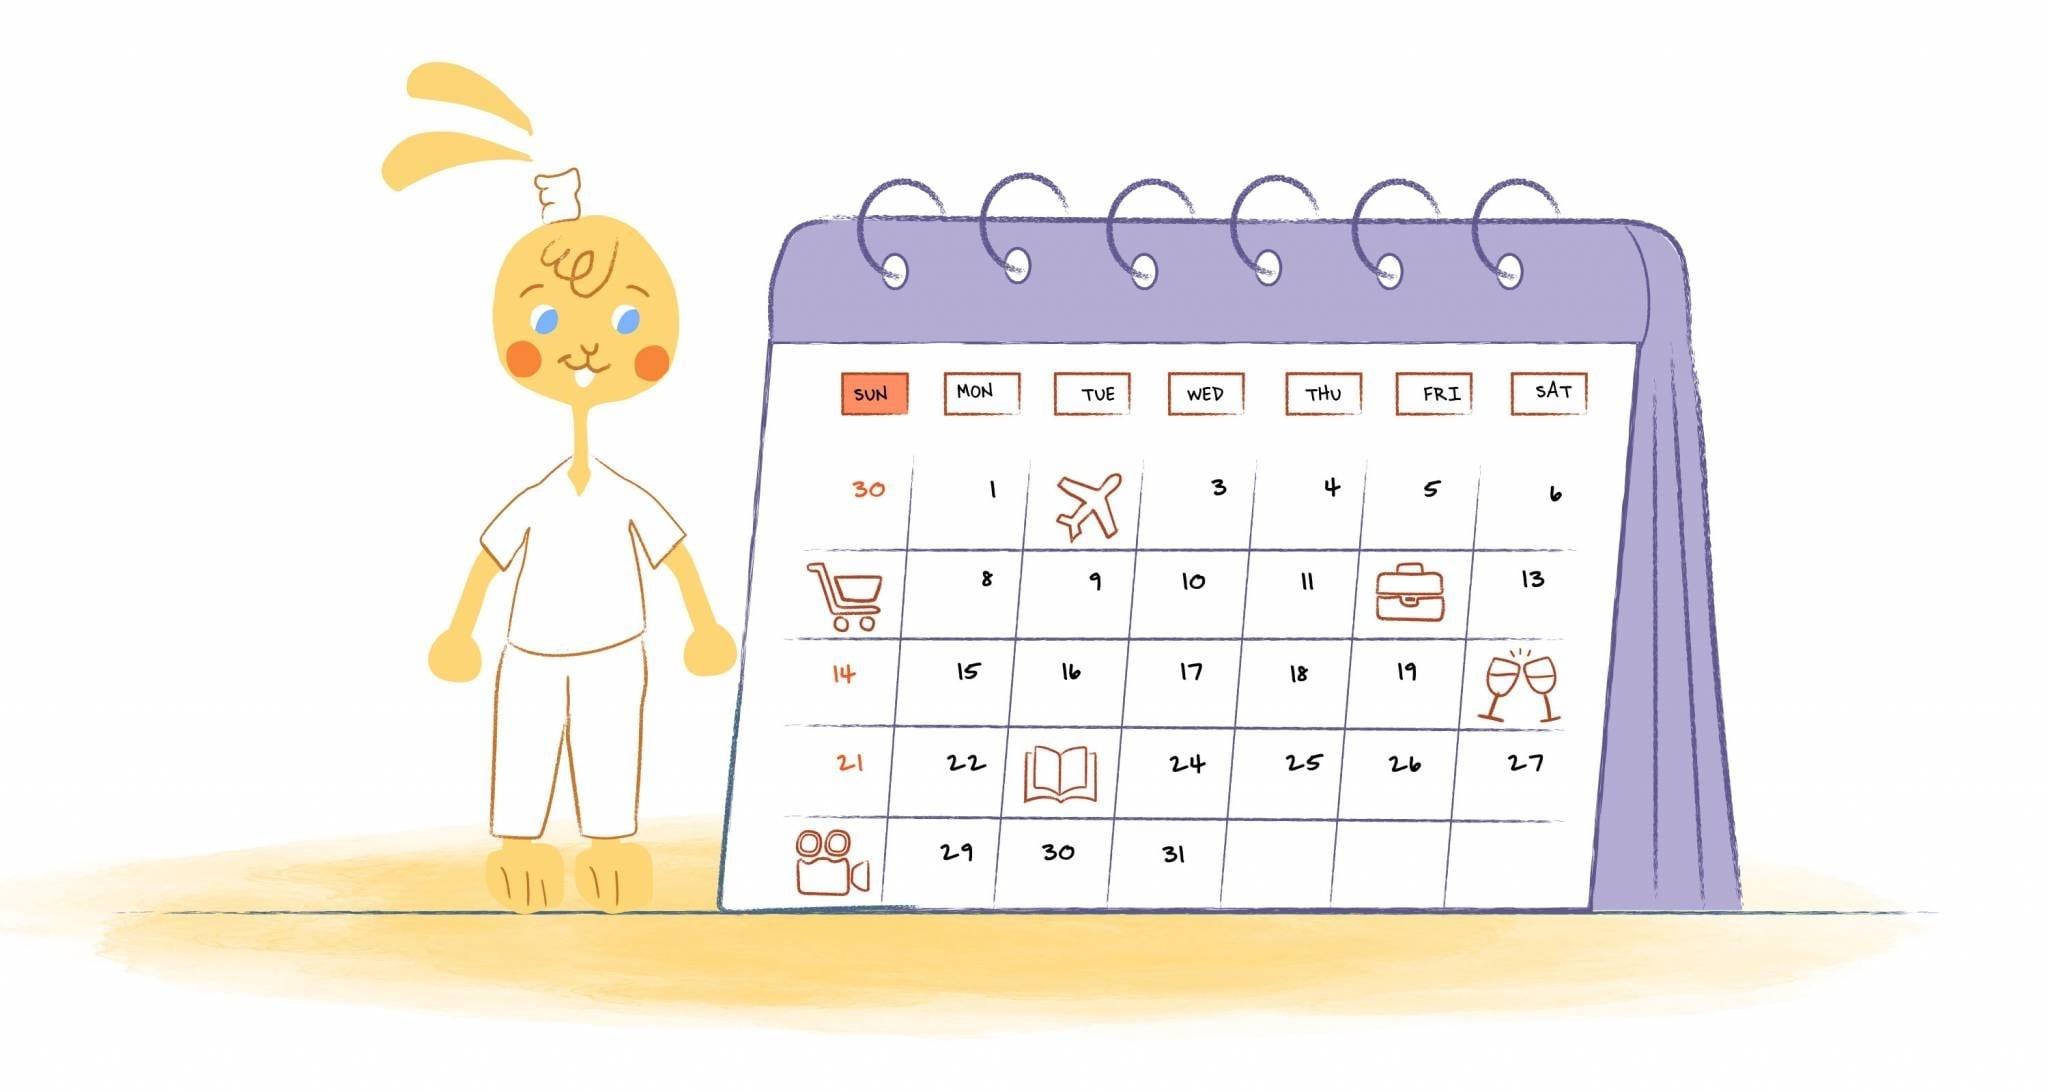 The Ultimate Guide To Google Calendar - Calendar Calendar App Icon Shows Wrong Date